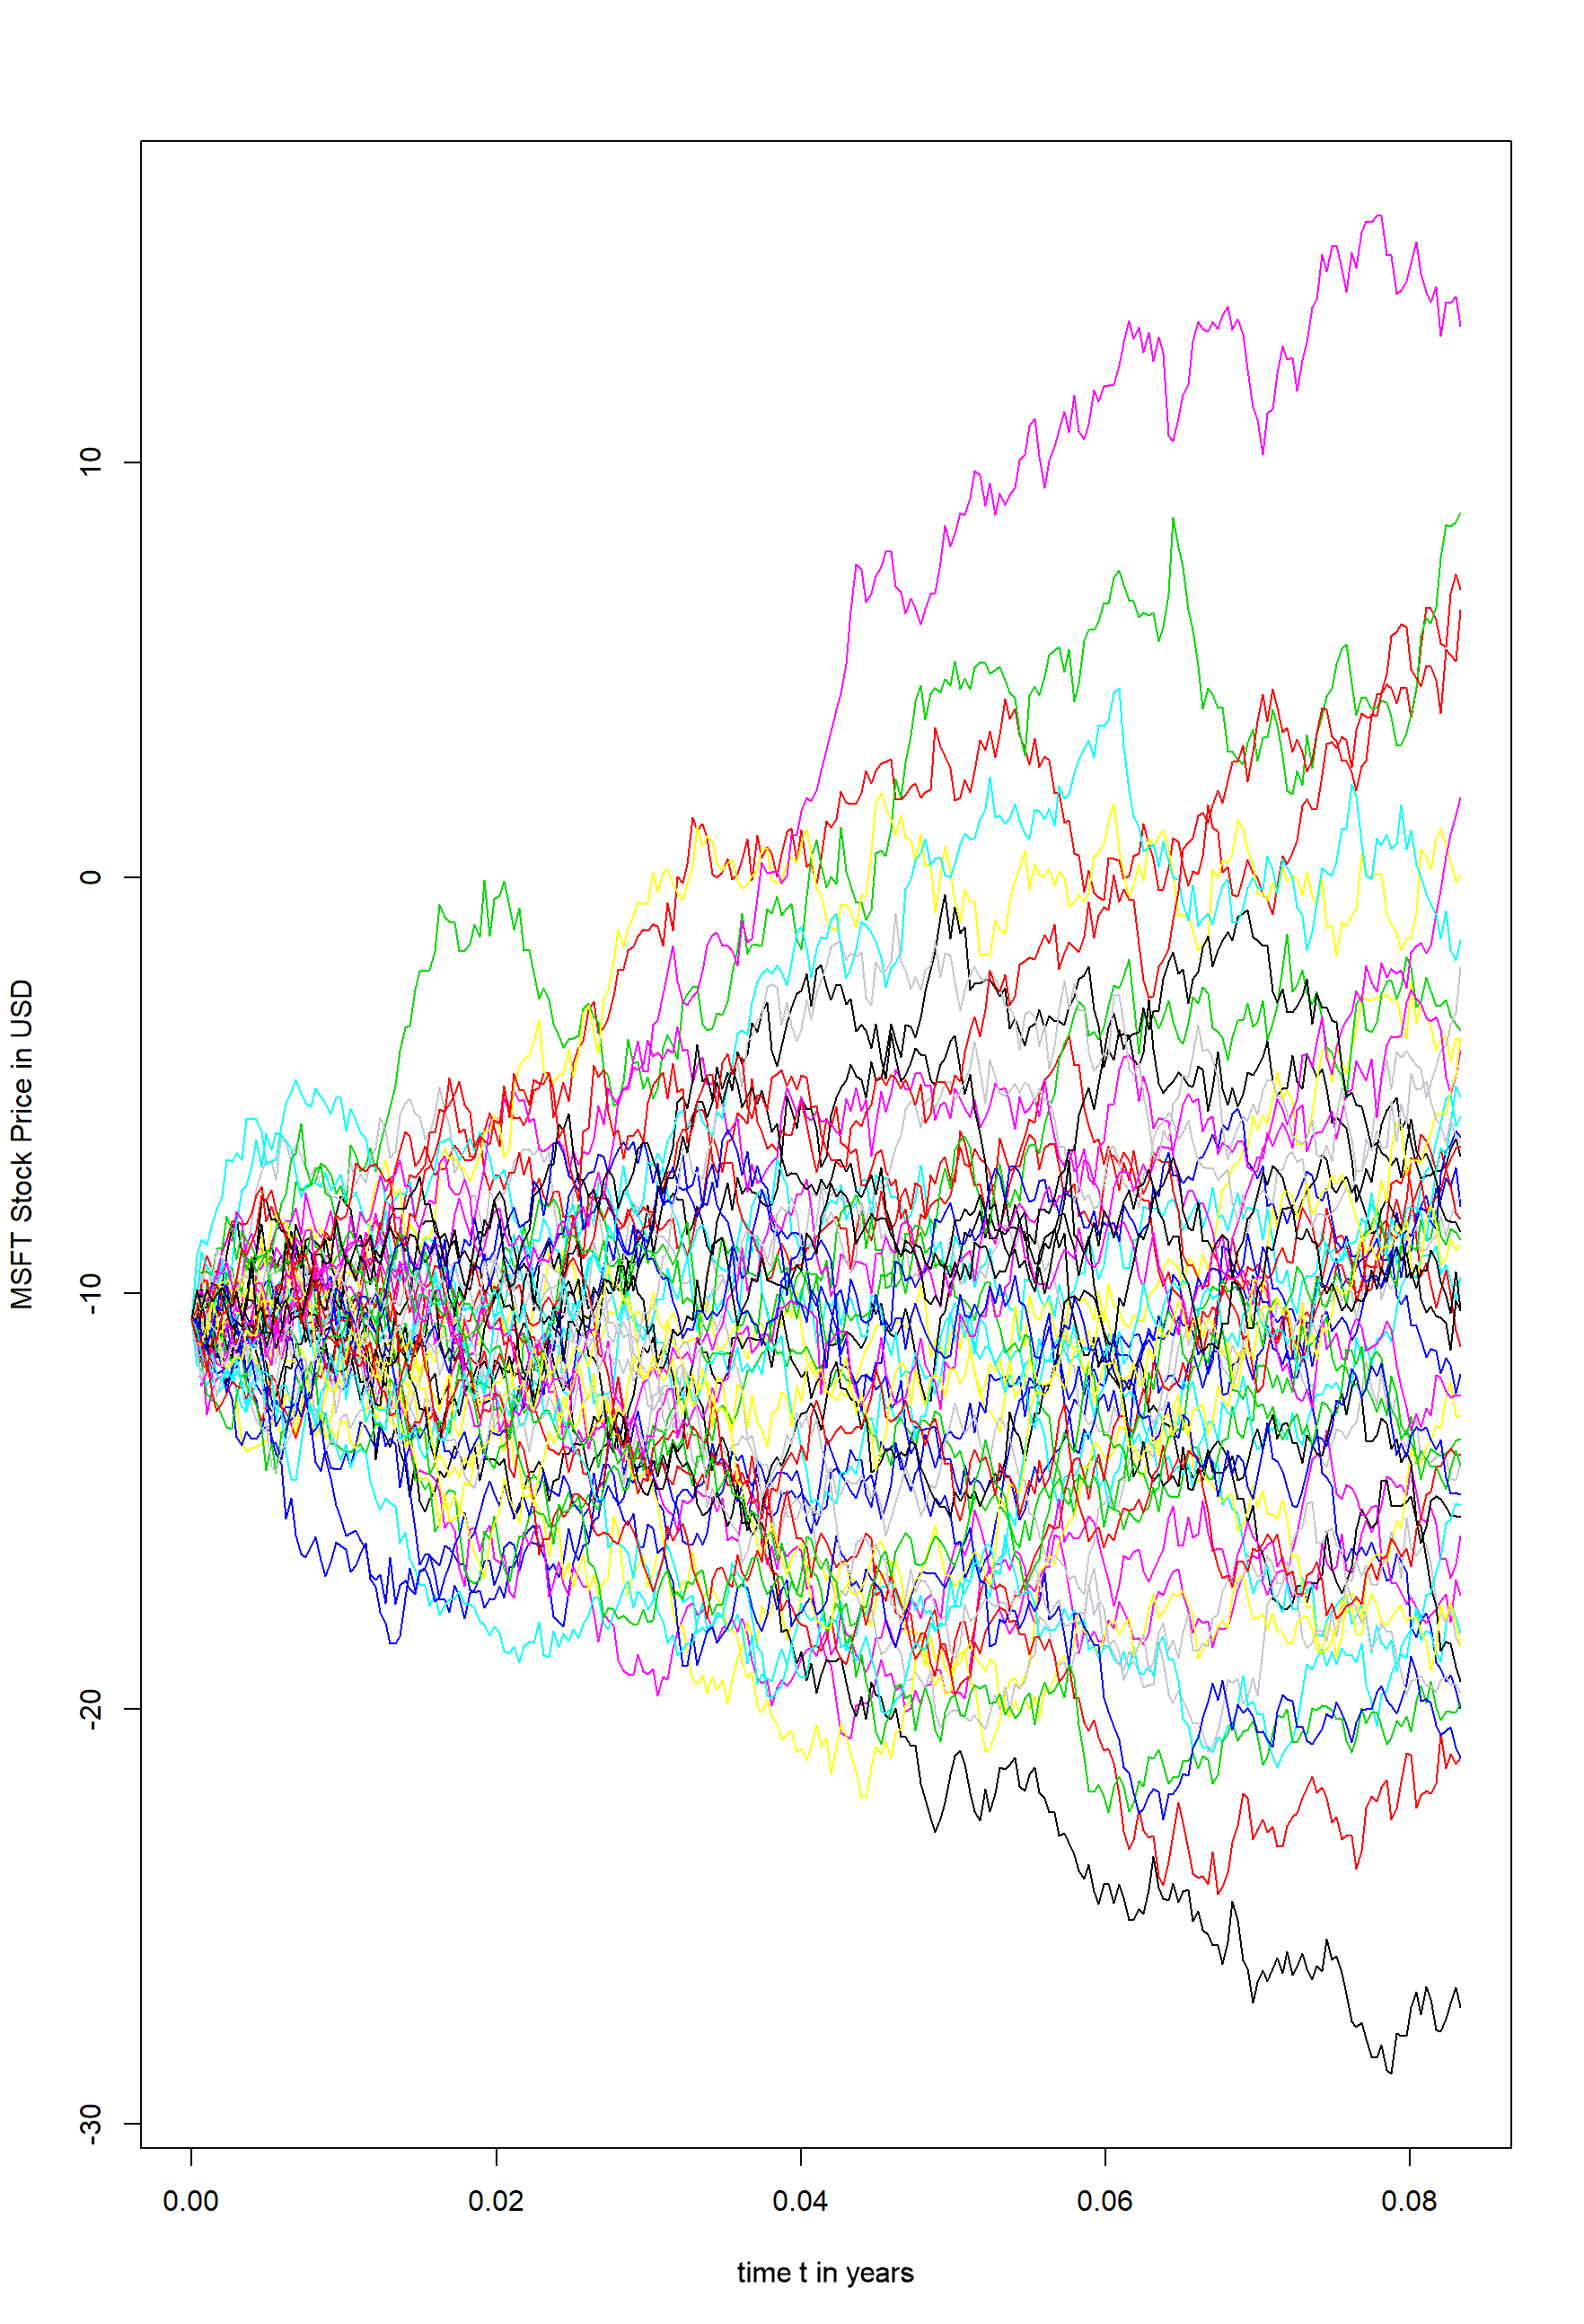 Figure 1 - 50 Monte Carlo Paths